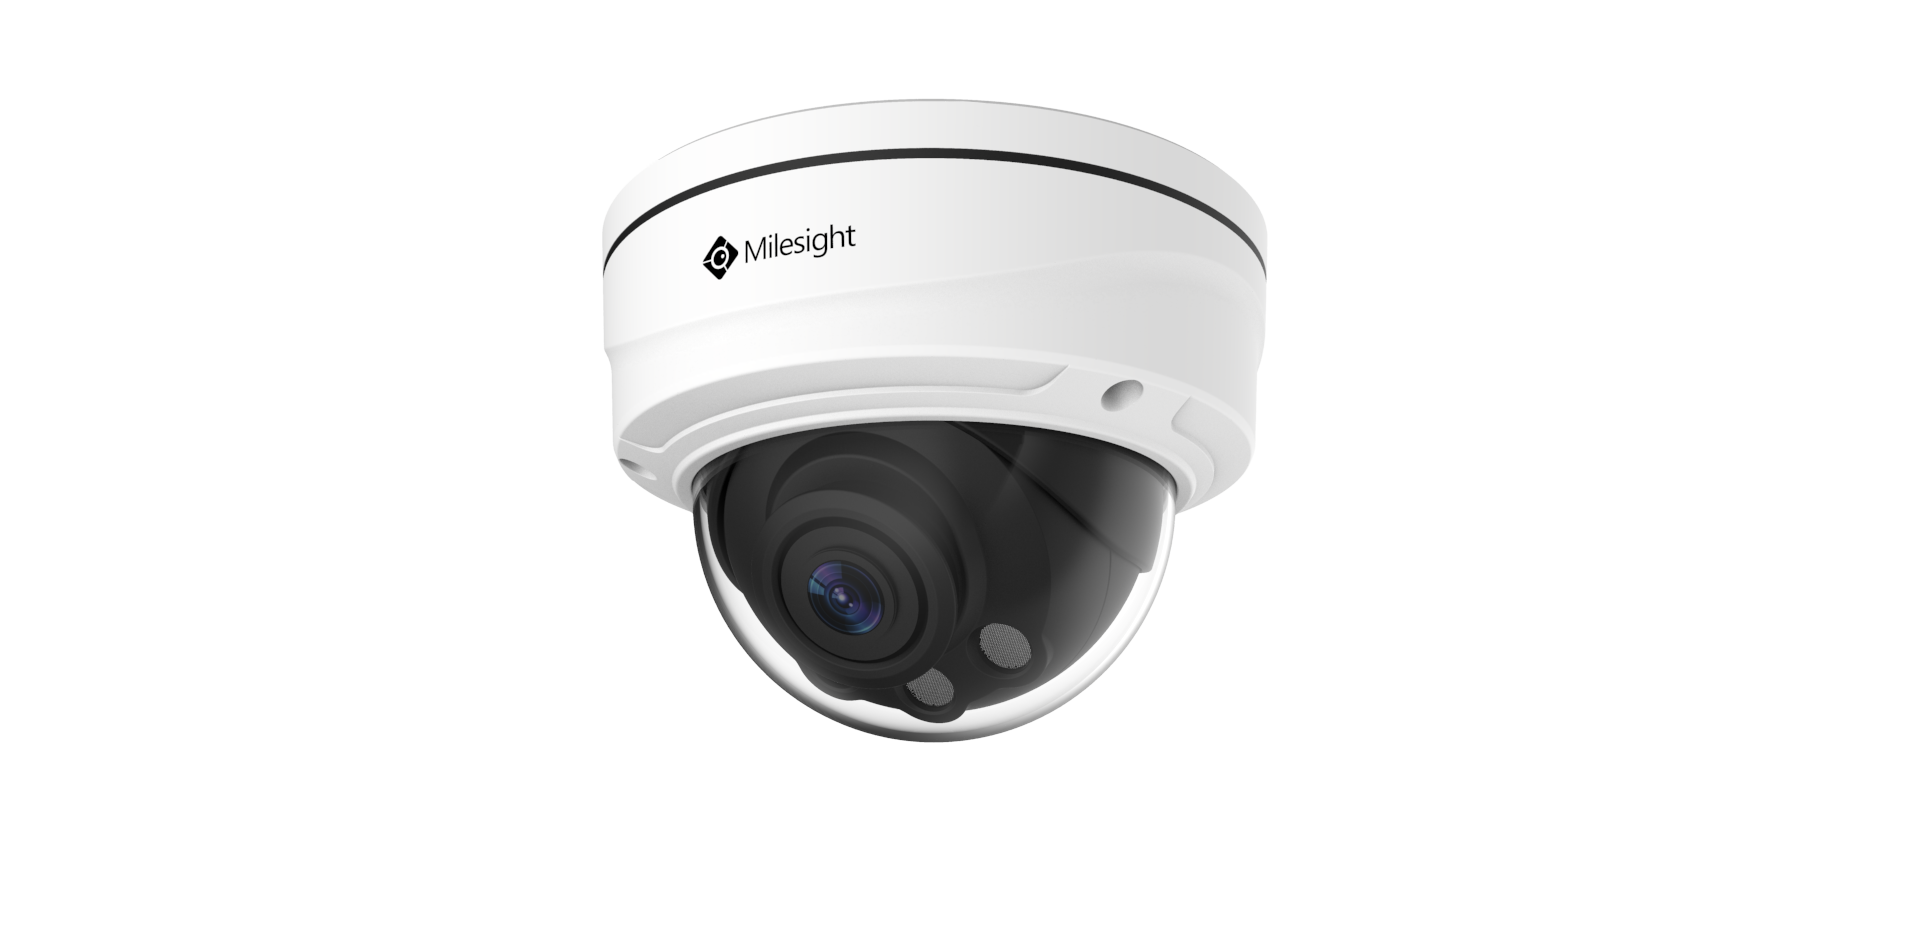 Ip pro 3. Камера Axis f1035-e). Milesight MS-c2172-FPNA. Камера видеонаблюдения + объектив Avenir CCTV Lens 2.8-12mm. IP Pro видеонаблюдение.